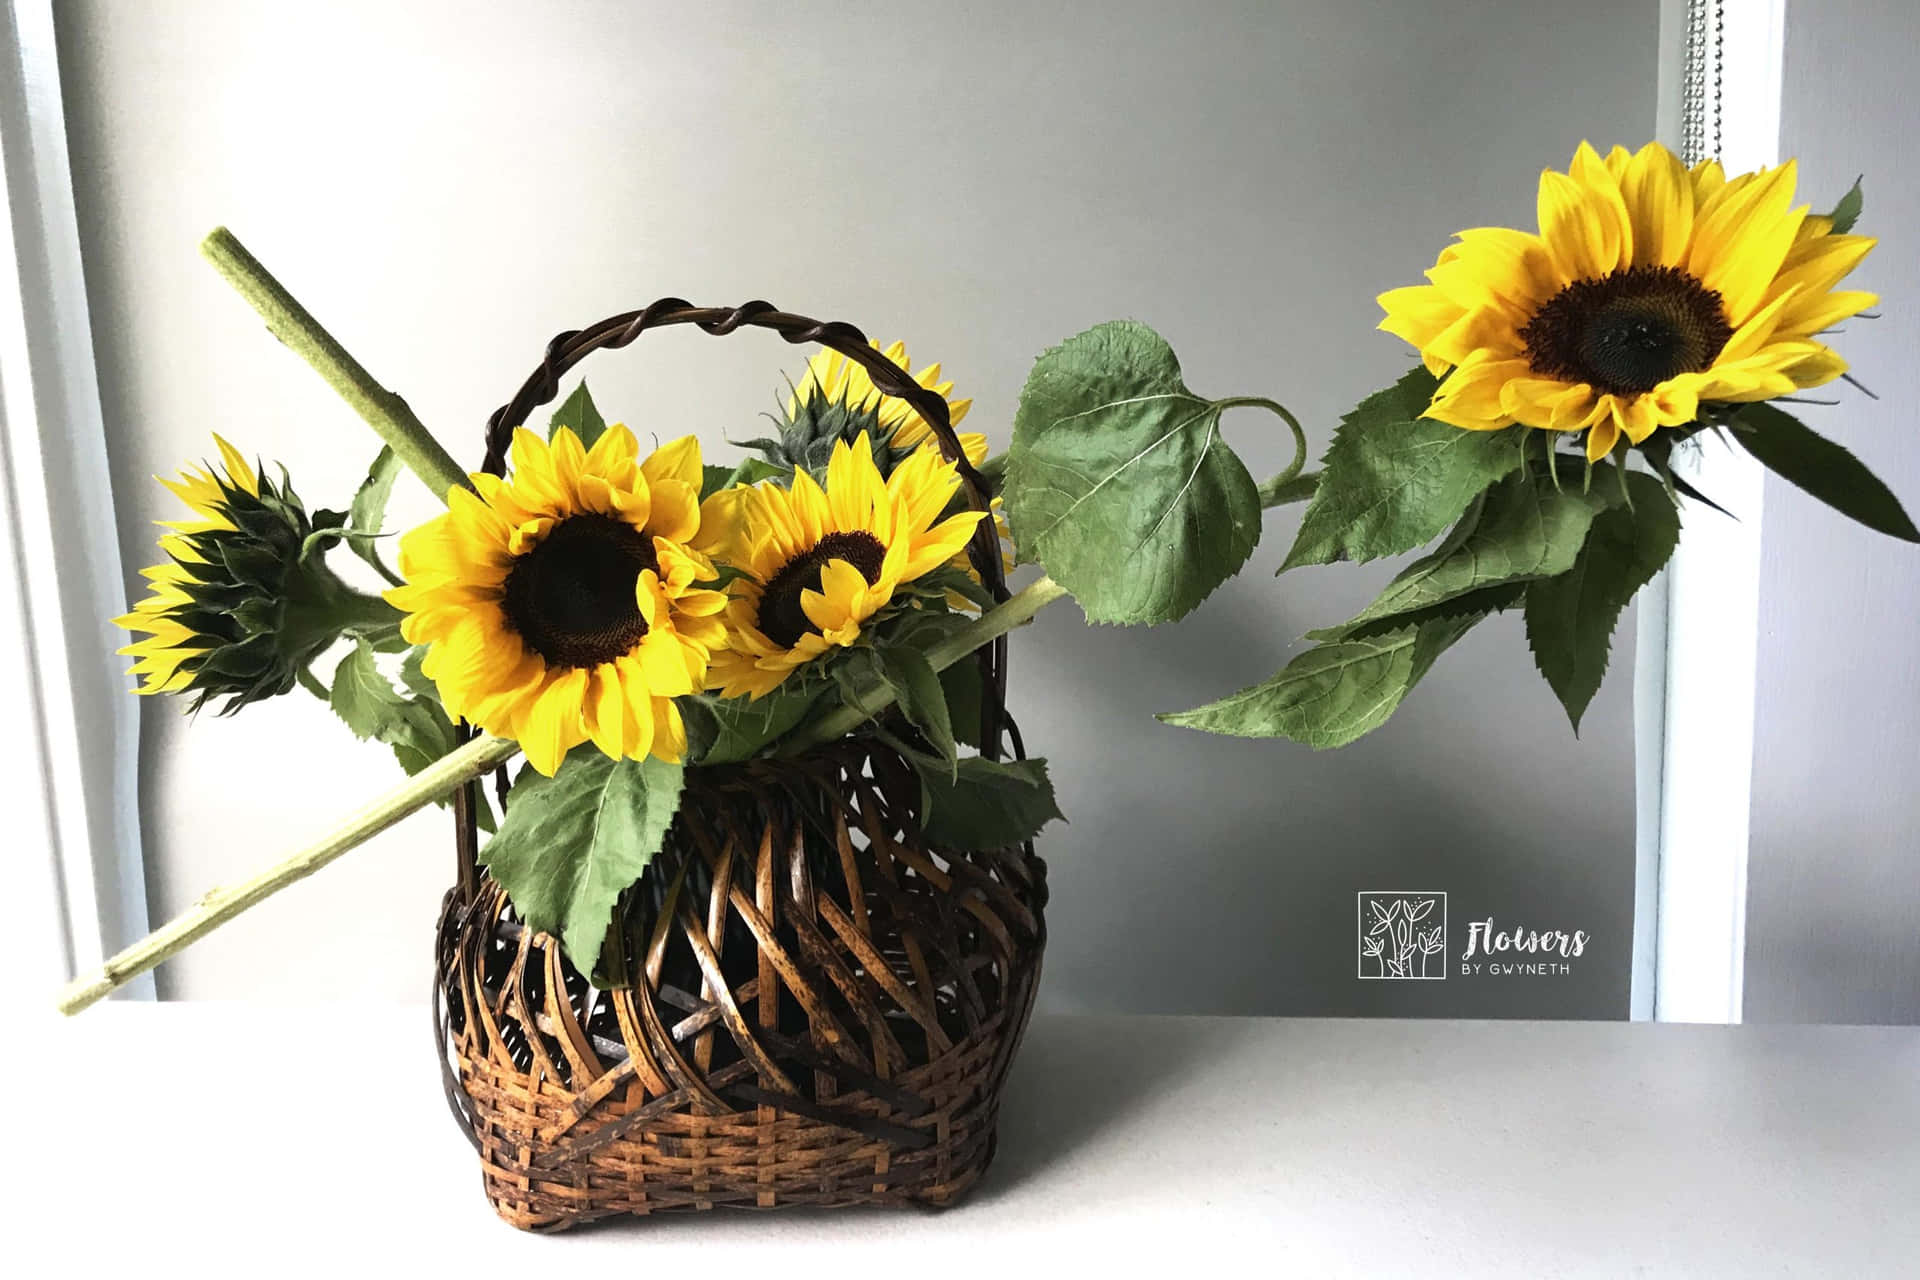 A Wicker Basket With Sunflowers In It